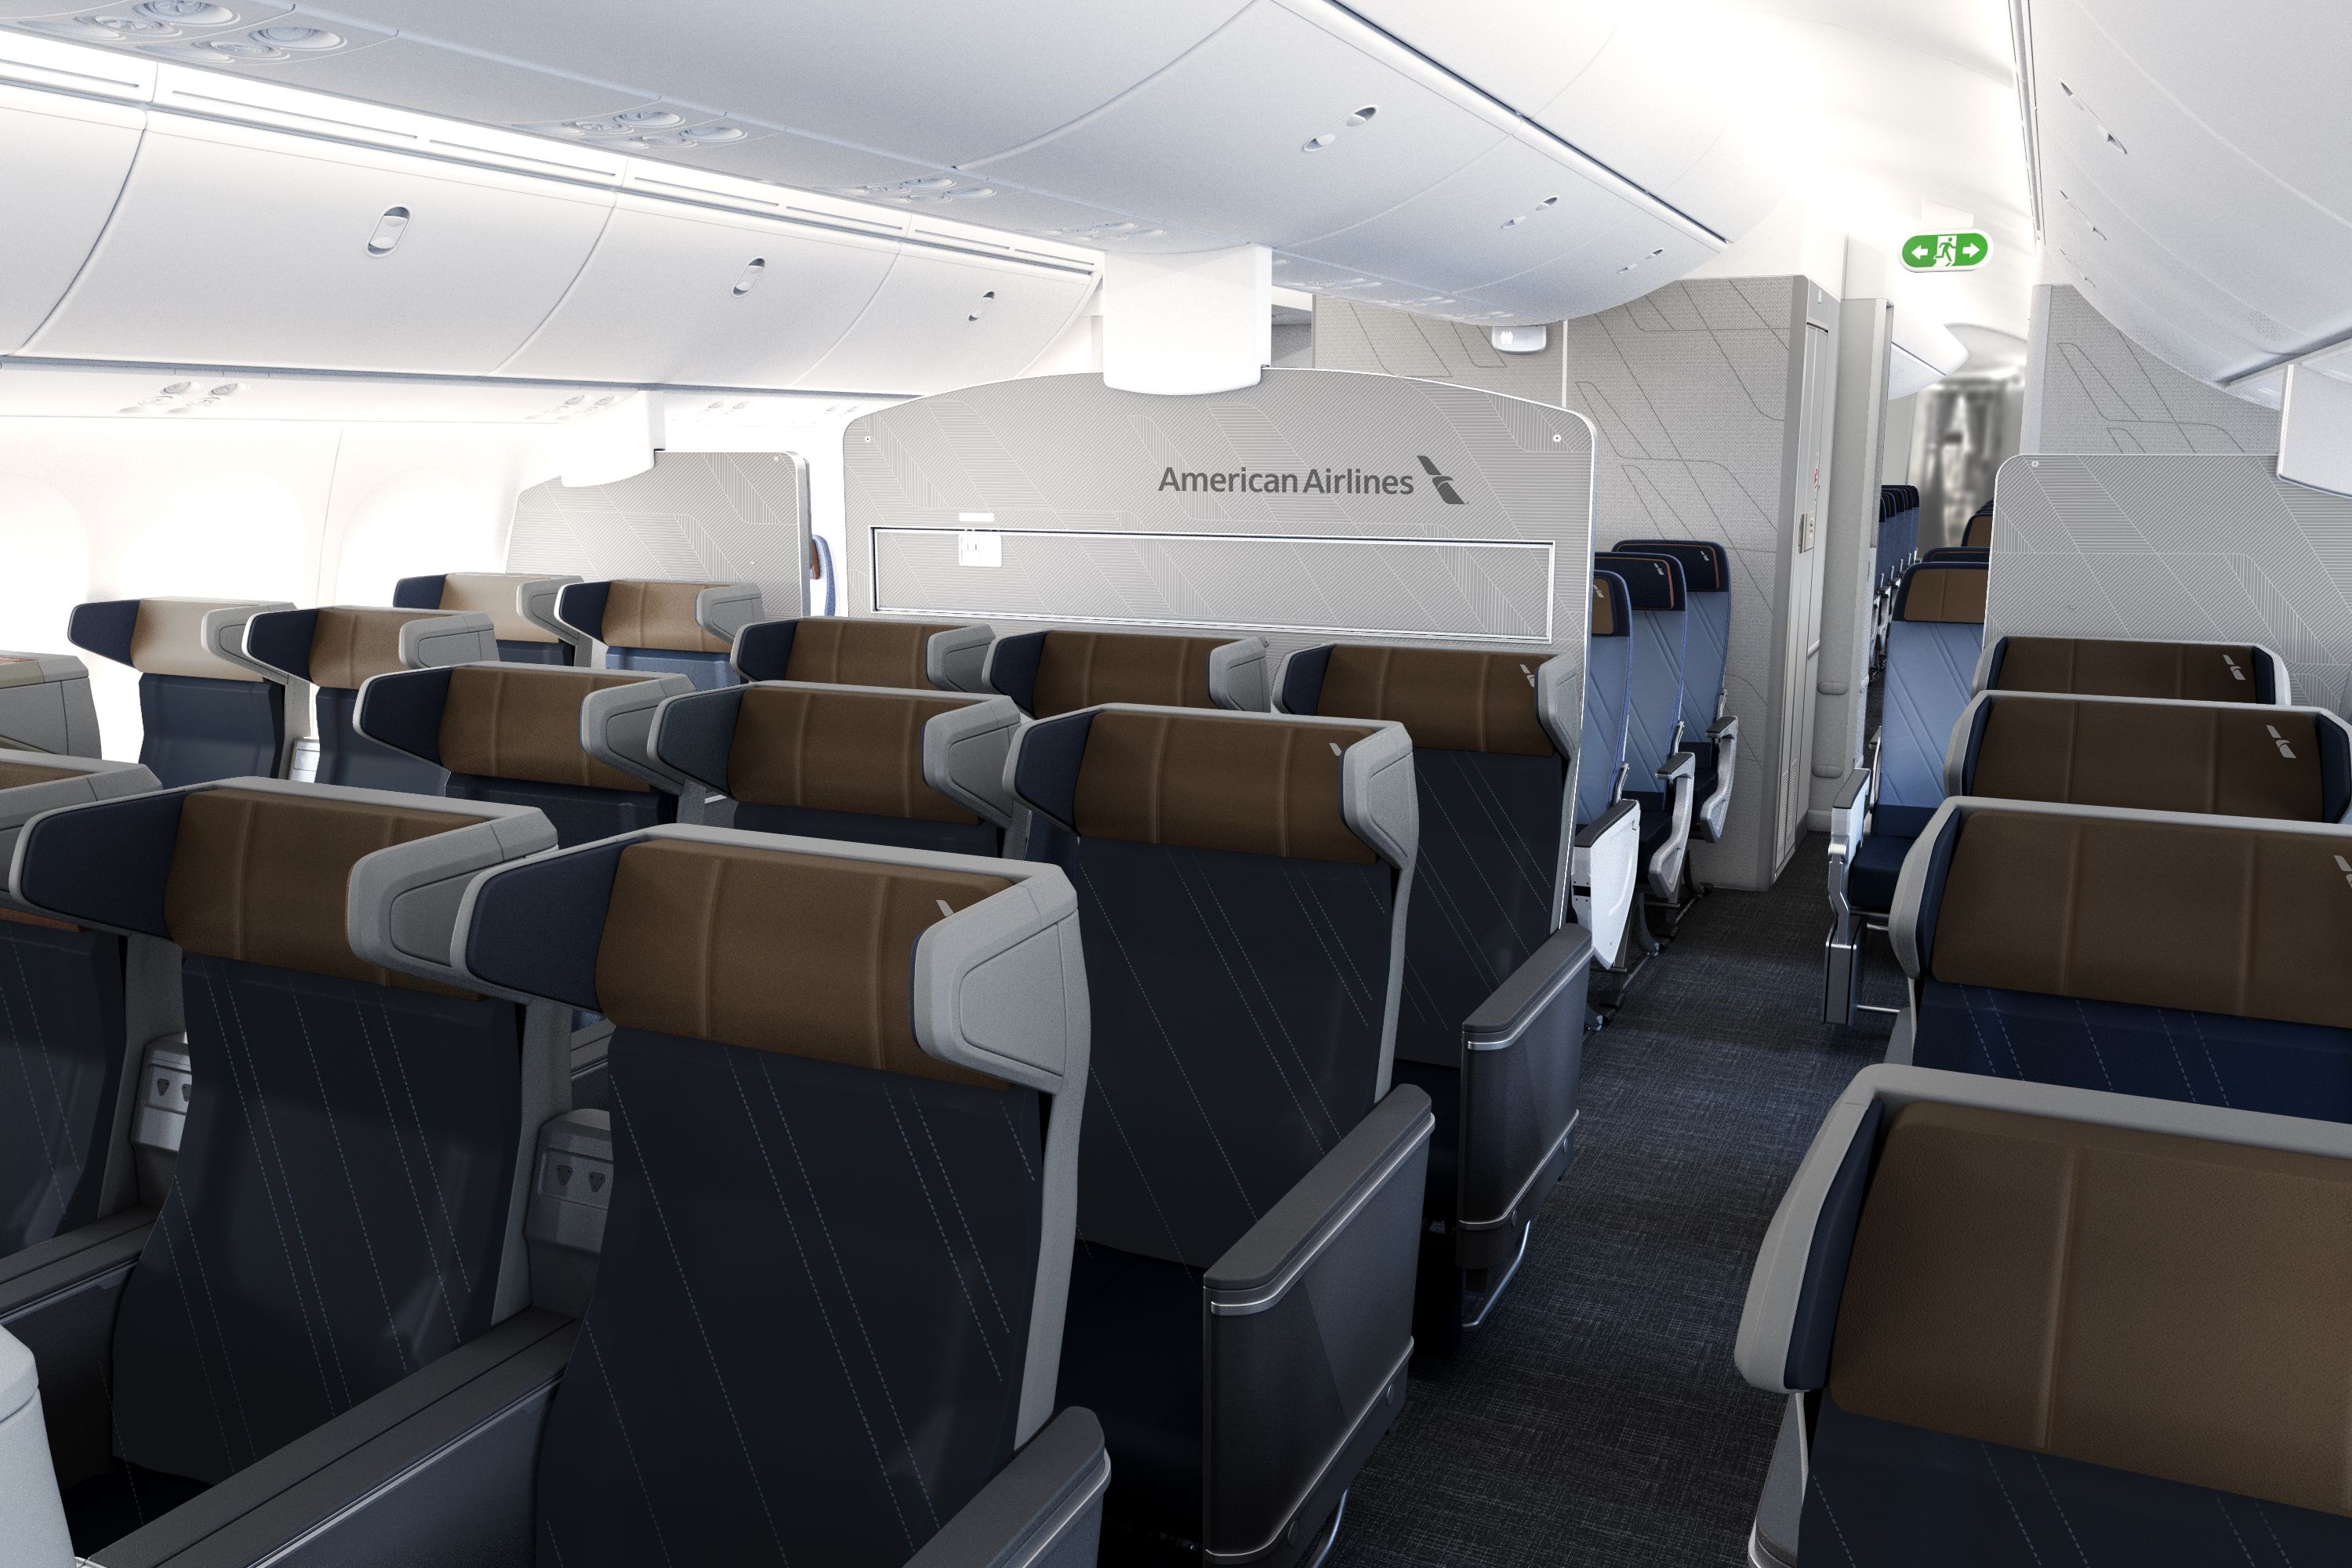 Inside the American Airlines Premium Economy cabin.